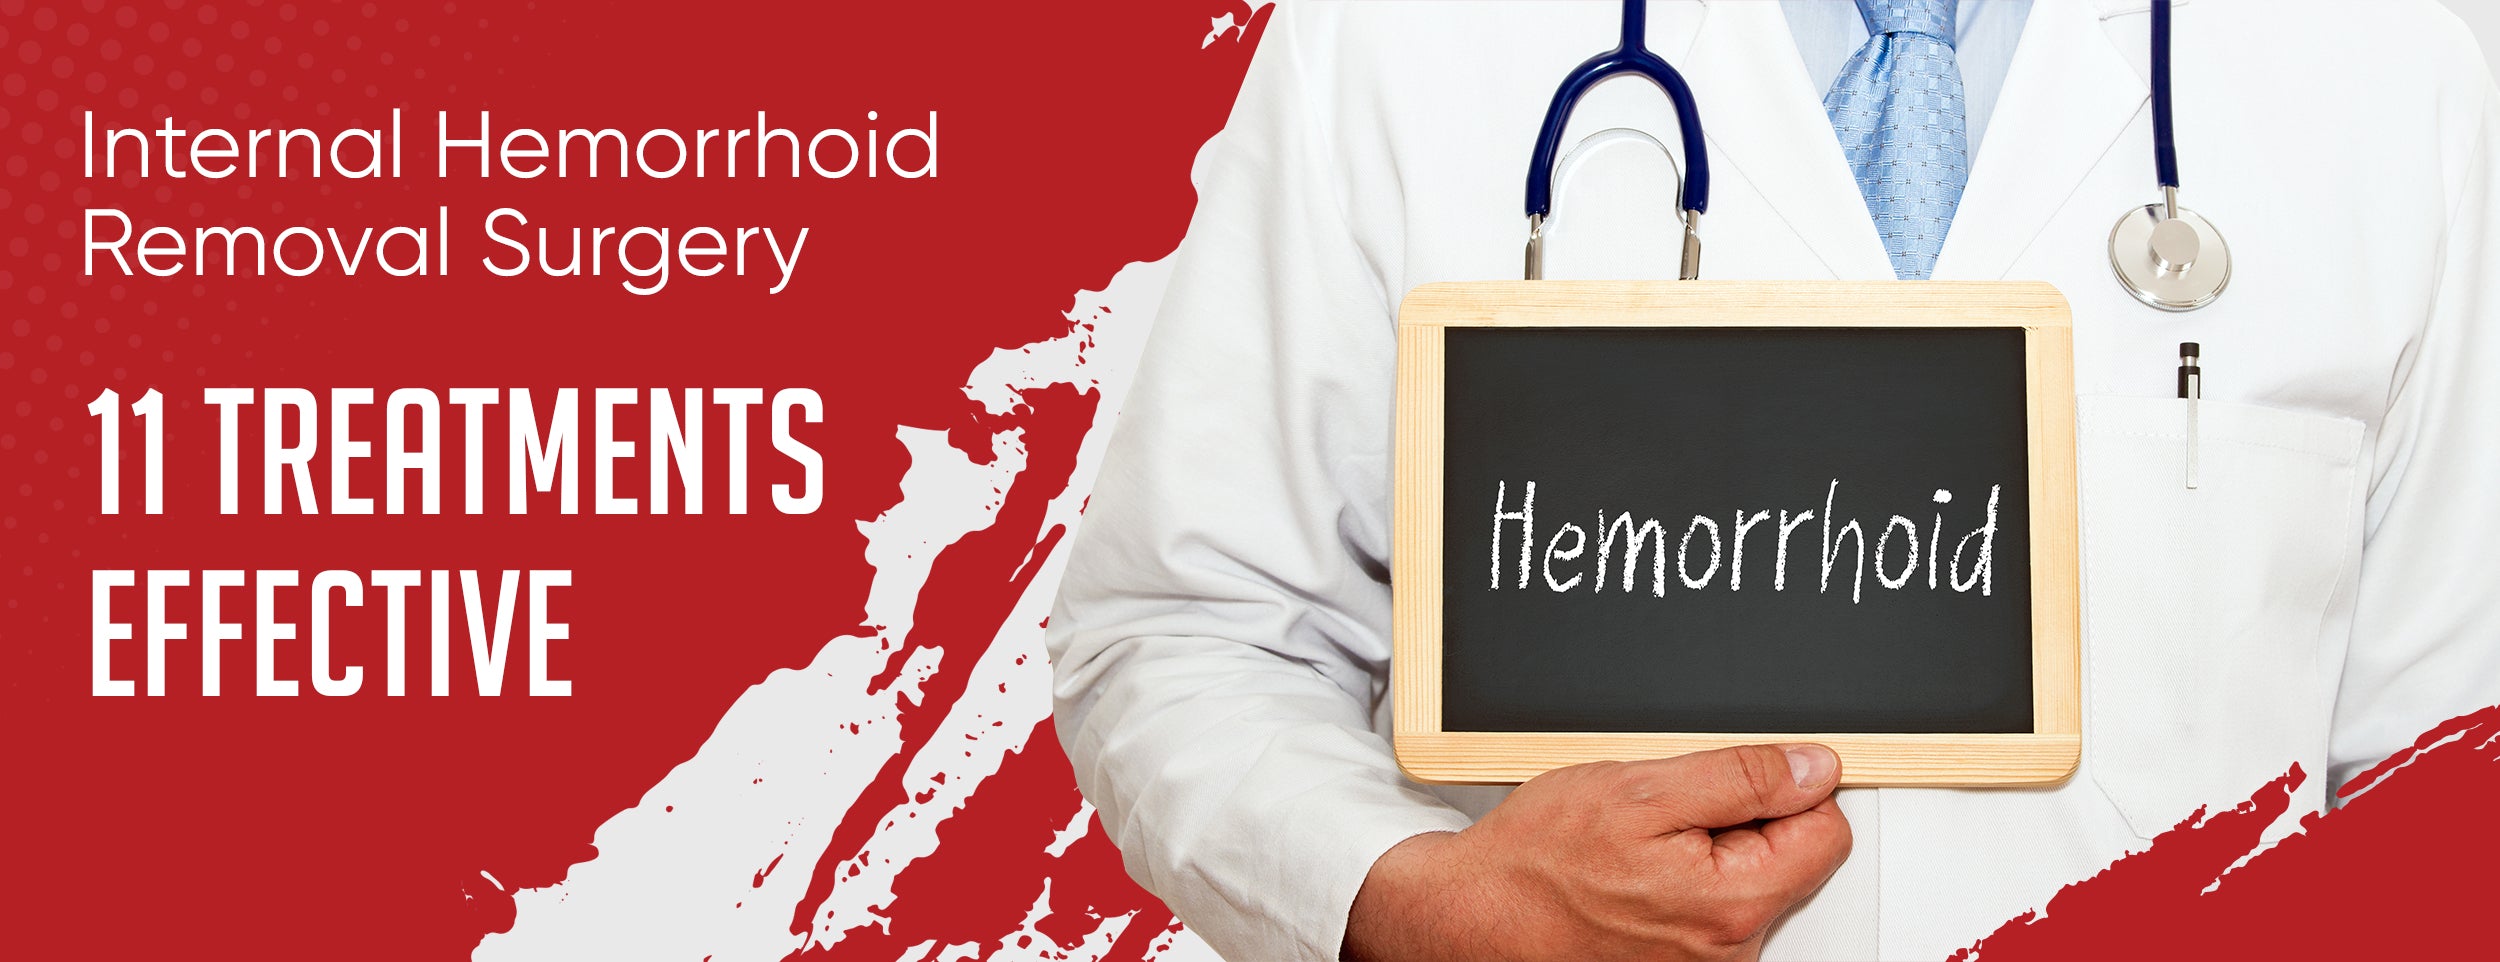 Removing internal hemorrhoids through surgery